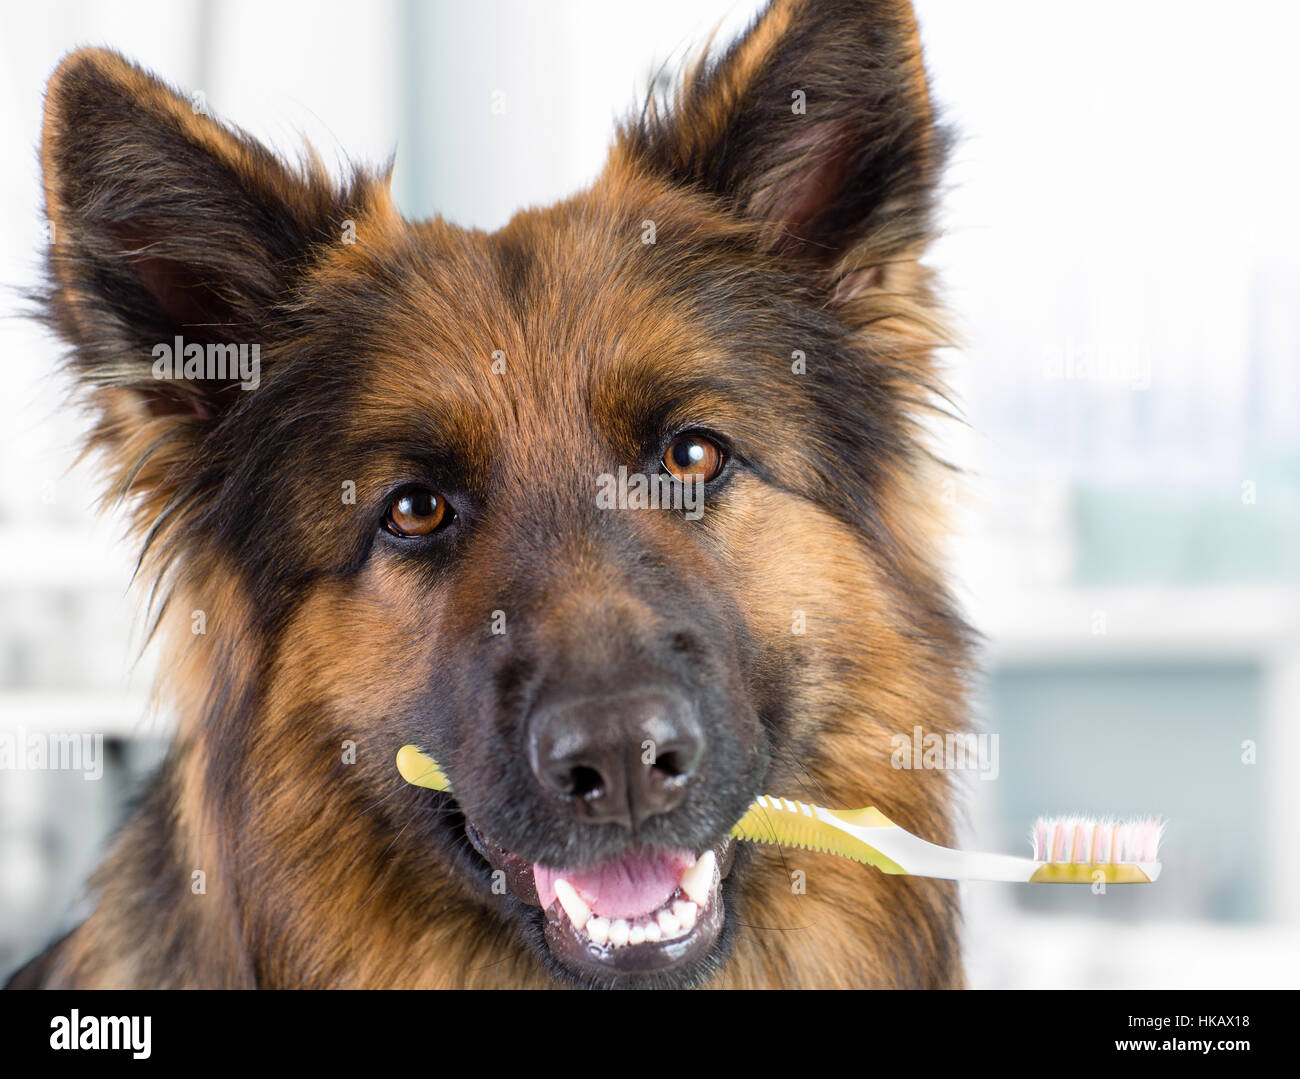 Dog holding toothbrush en bouche Banque D'Images